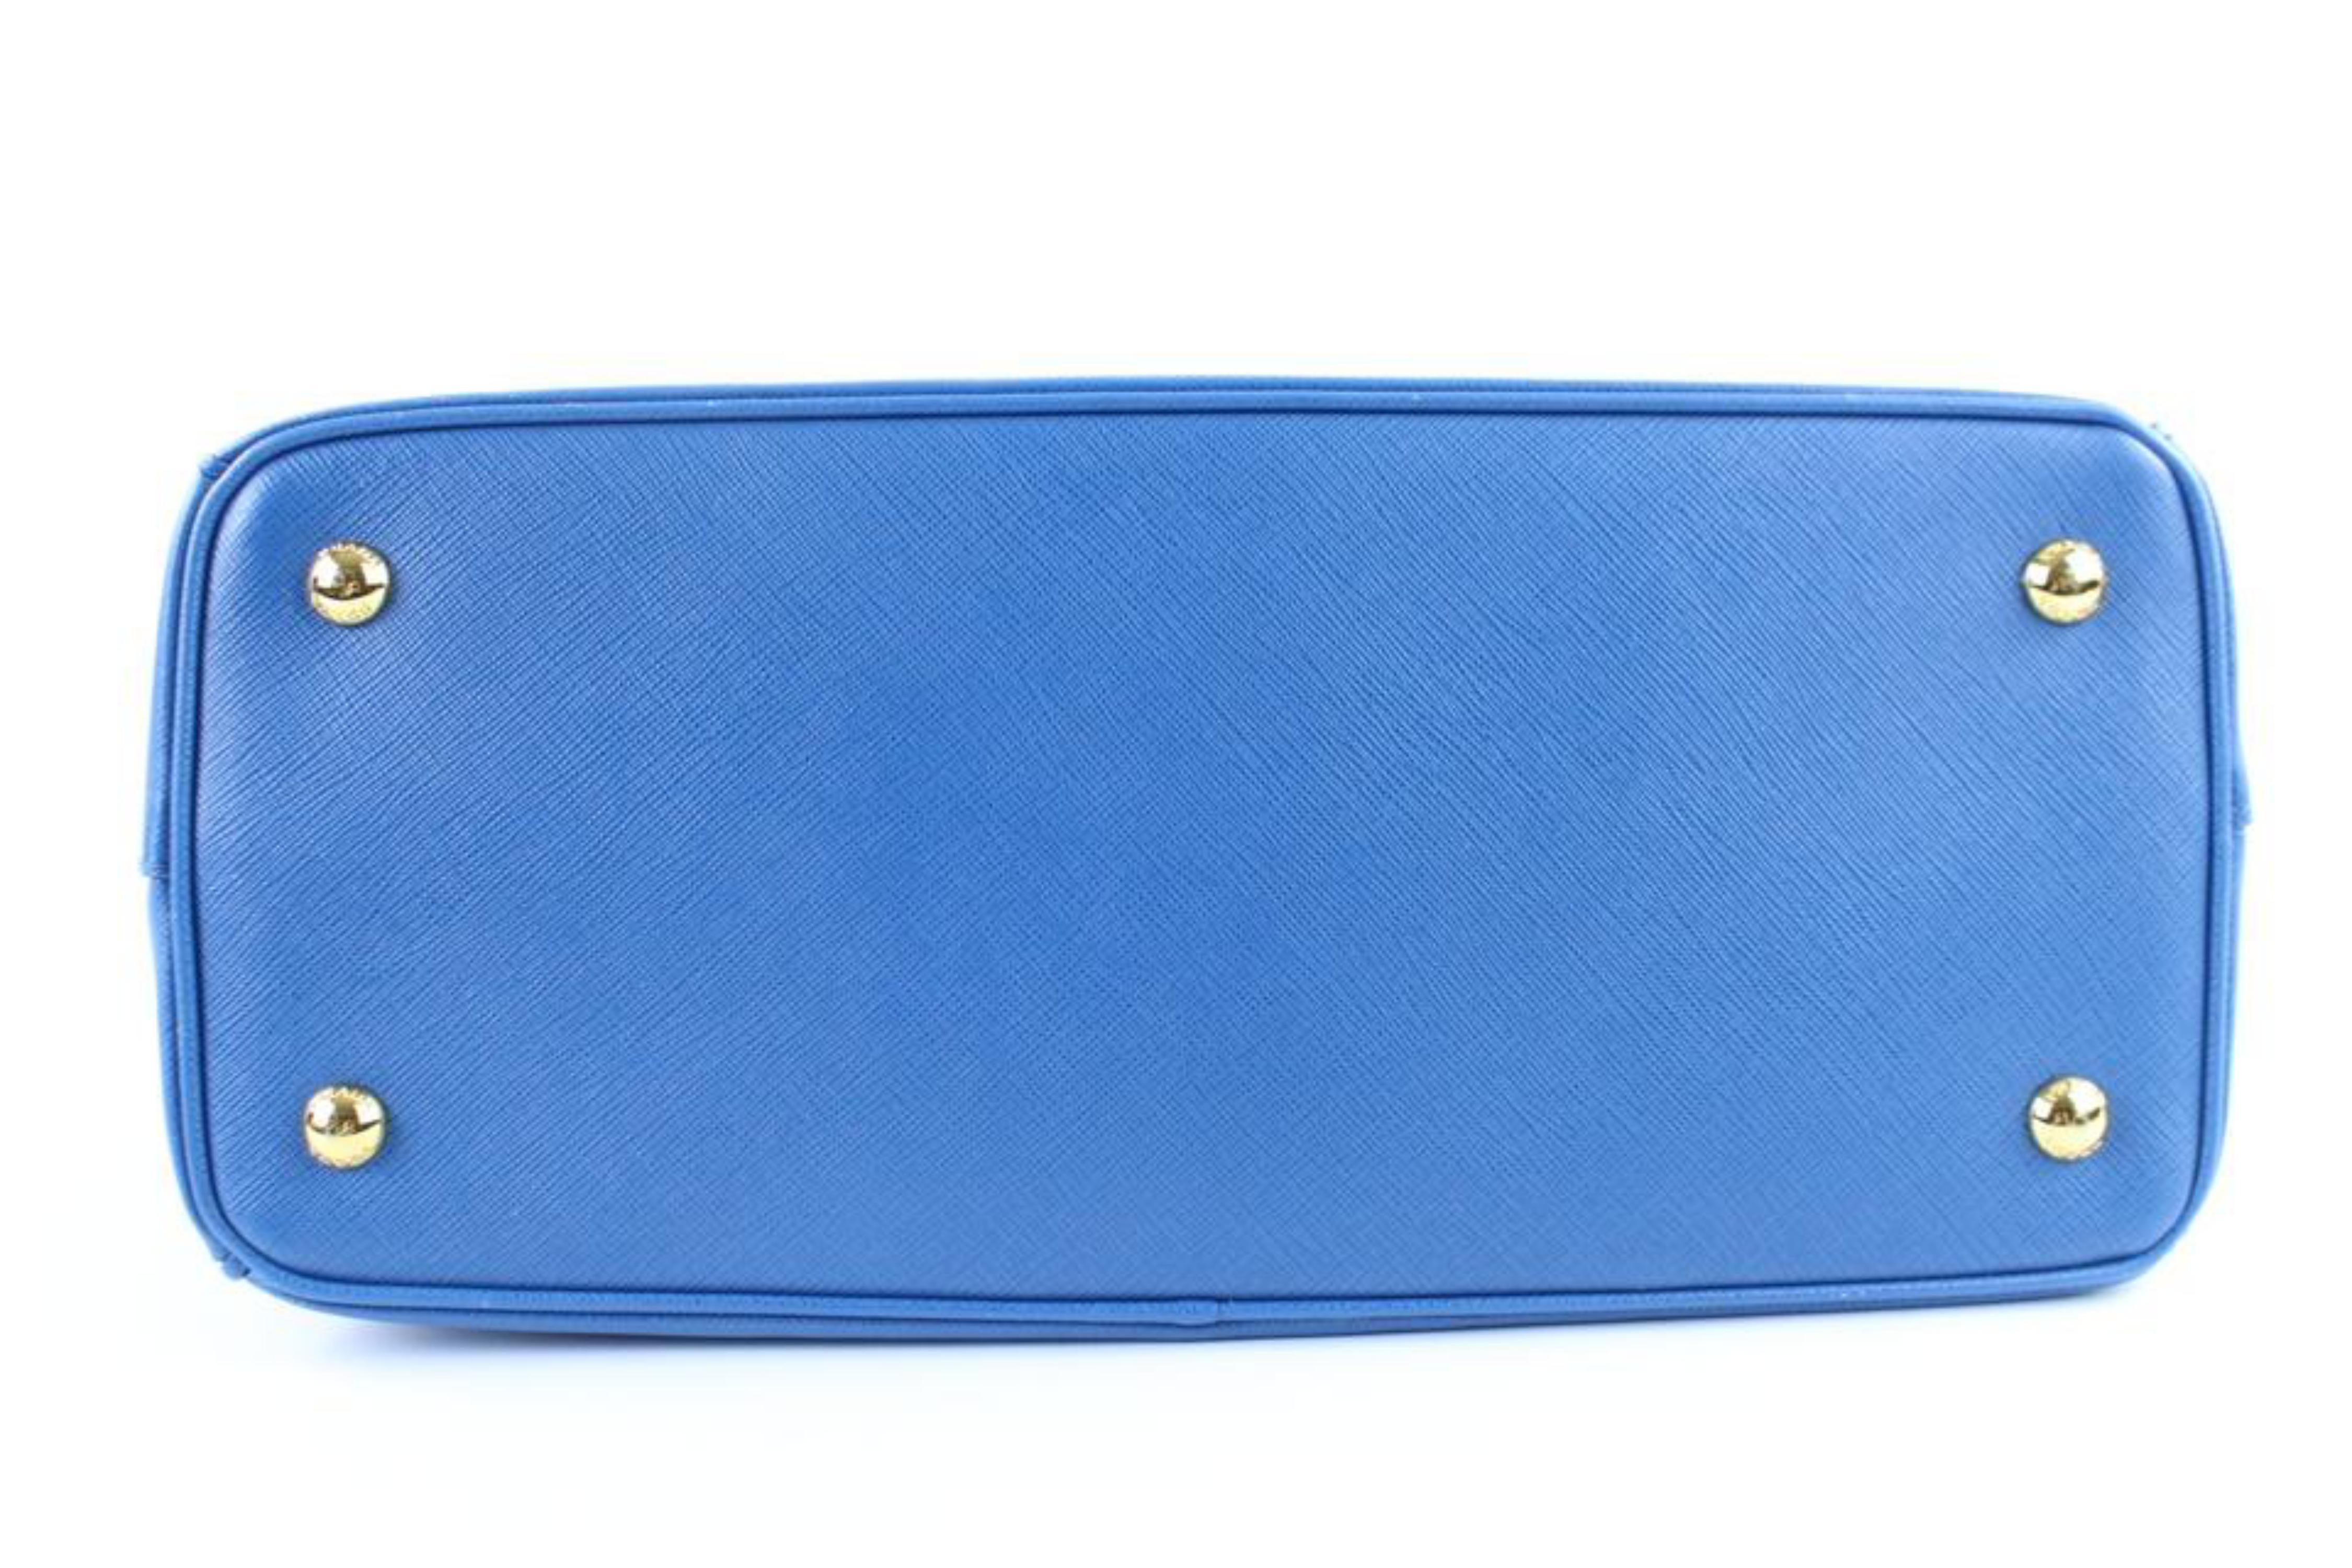 Prada Lux Saffiano 2way 2pr1205 Blue Patent Leather Tote For Sale 1